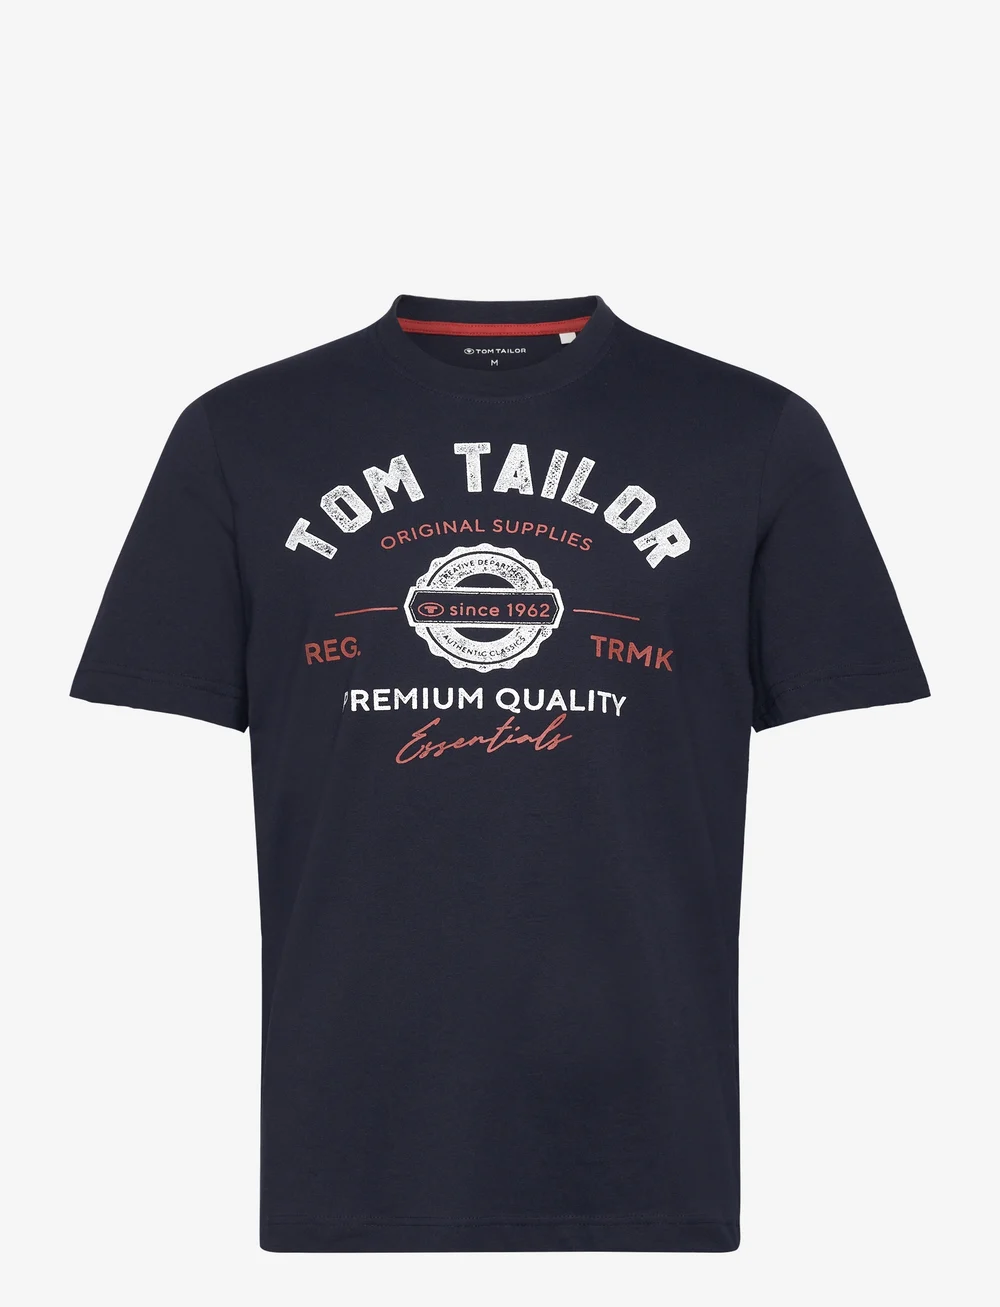 Tom Tailor Logo Tee – t-shirts – shop at Booztlet